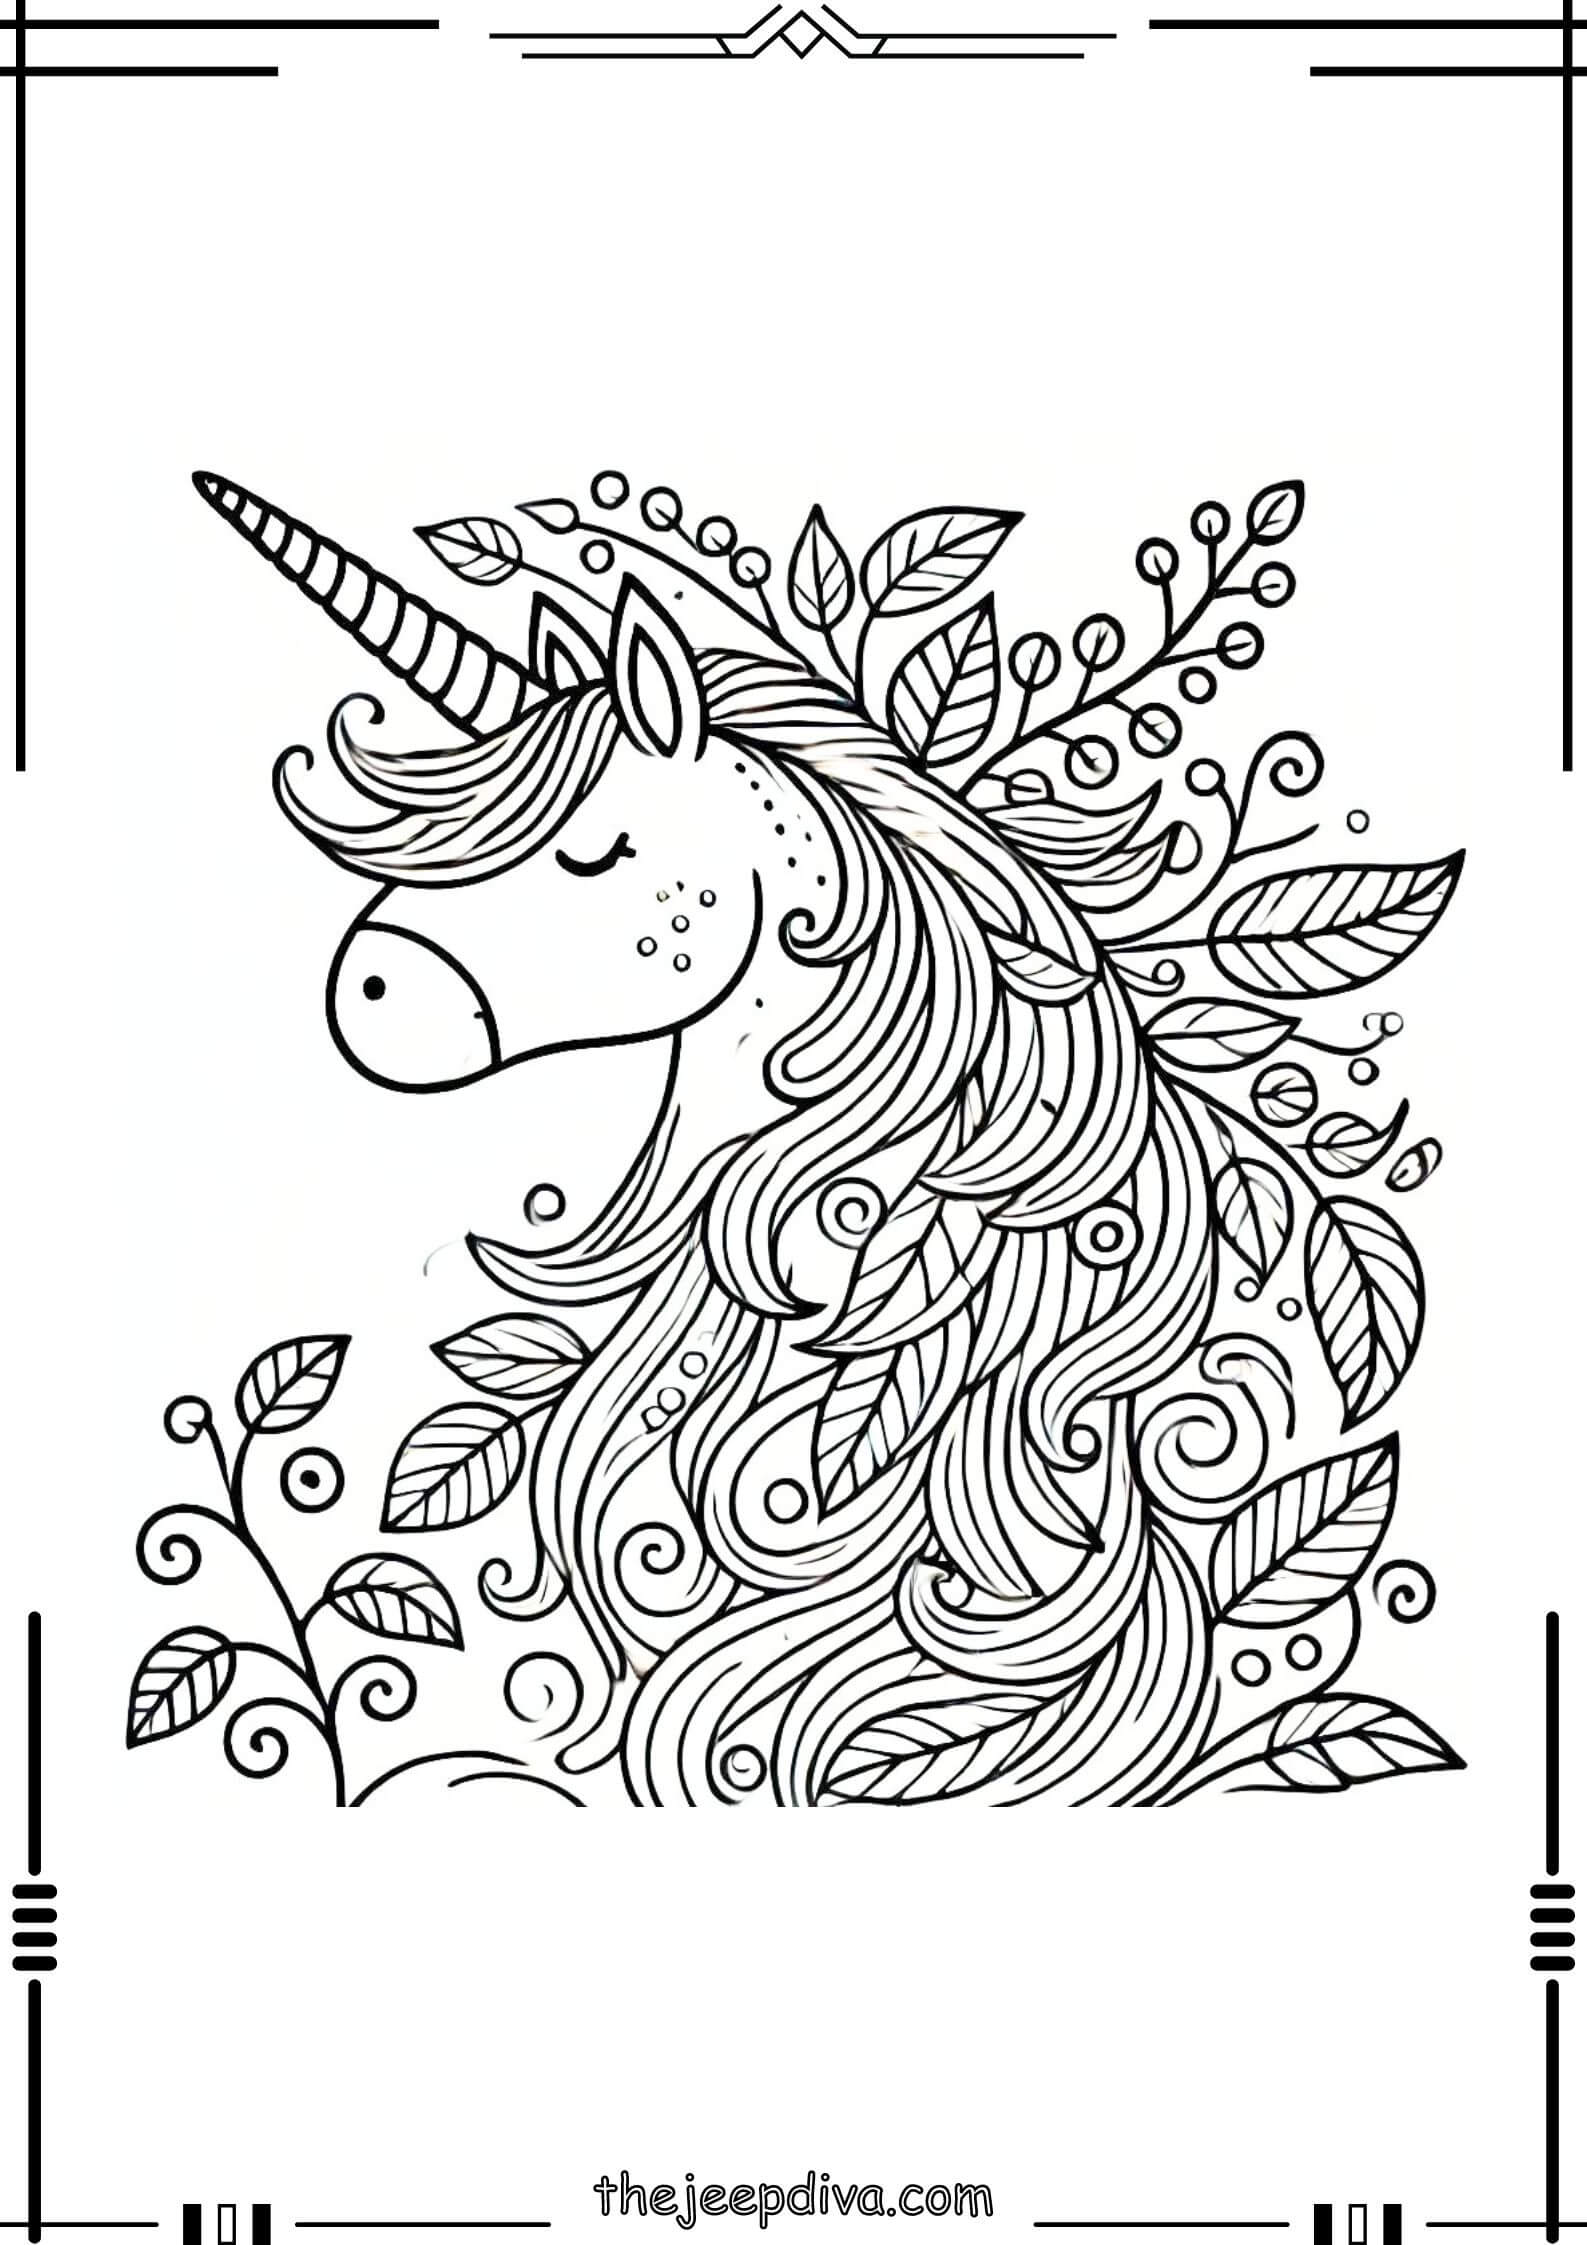 unicorn-coloring-page-hard-9